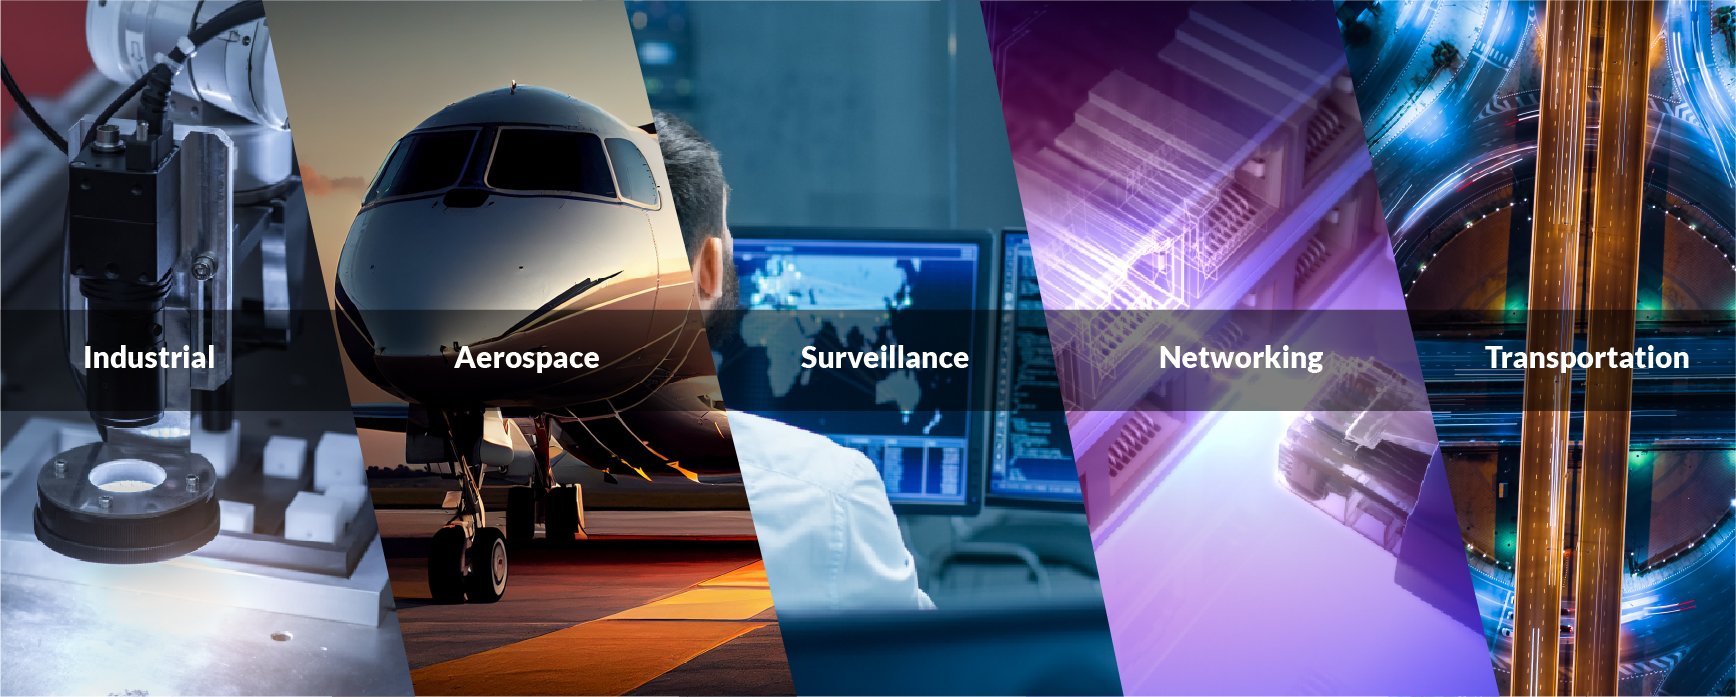 Industrial / Aerospace / Surveillance / Networking / Transportation